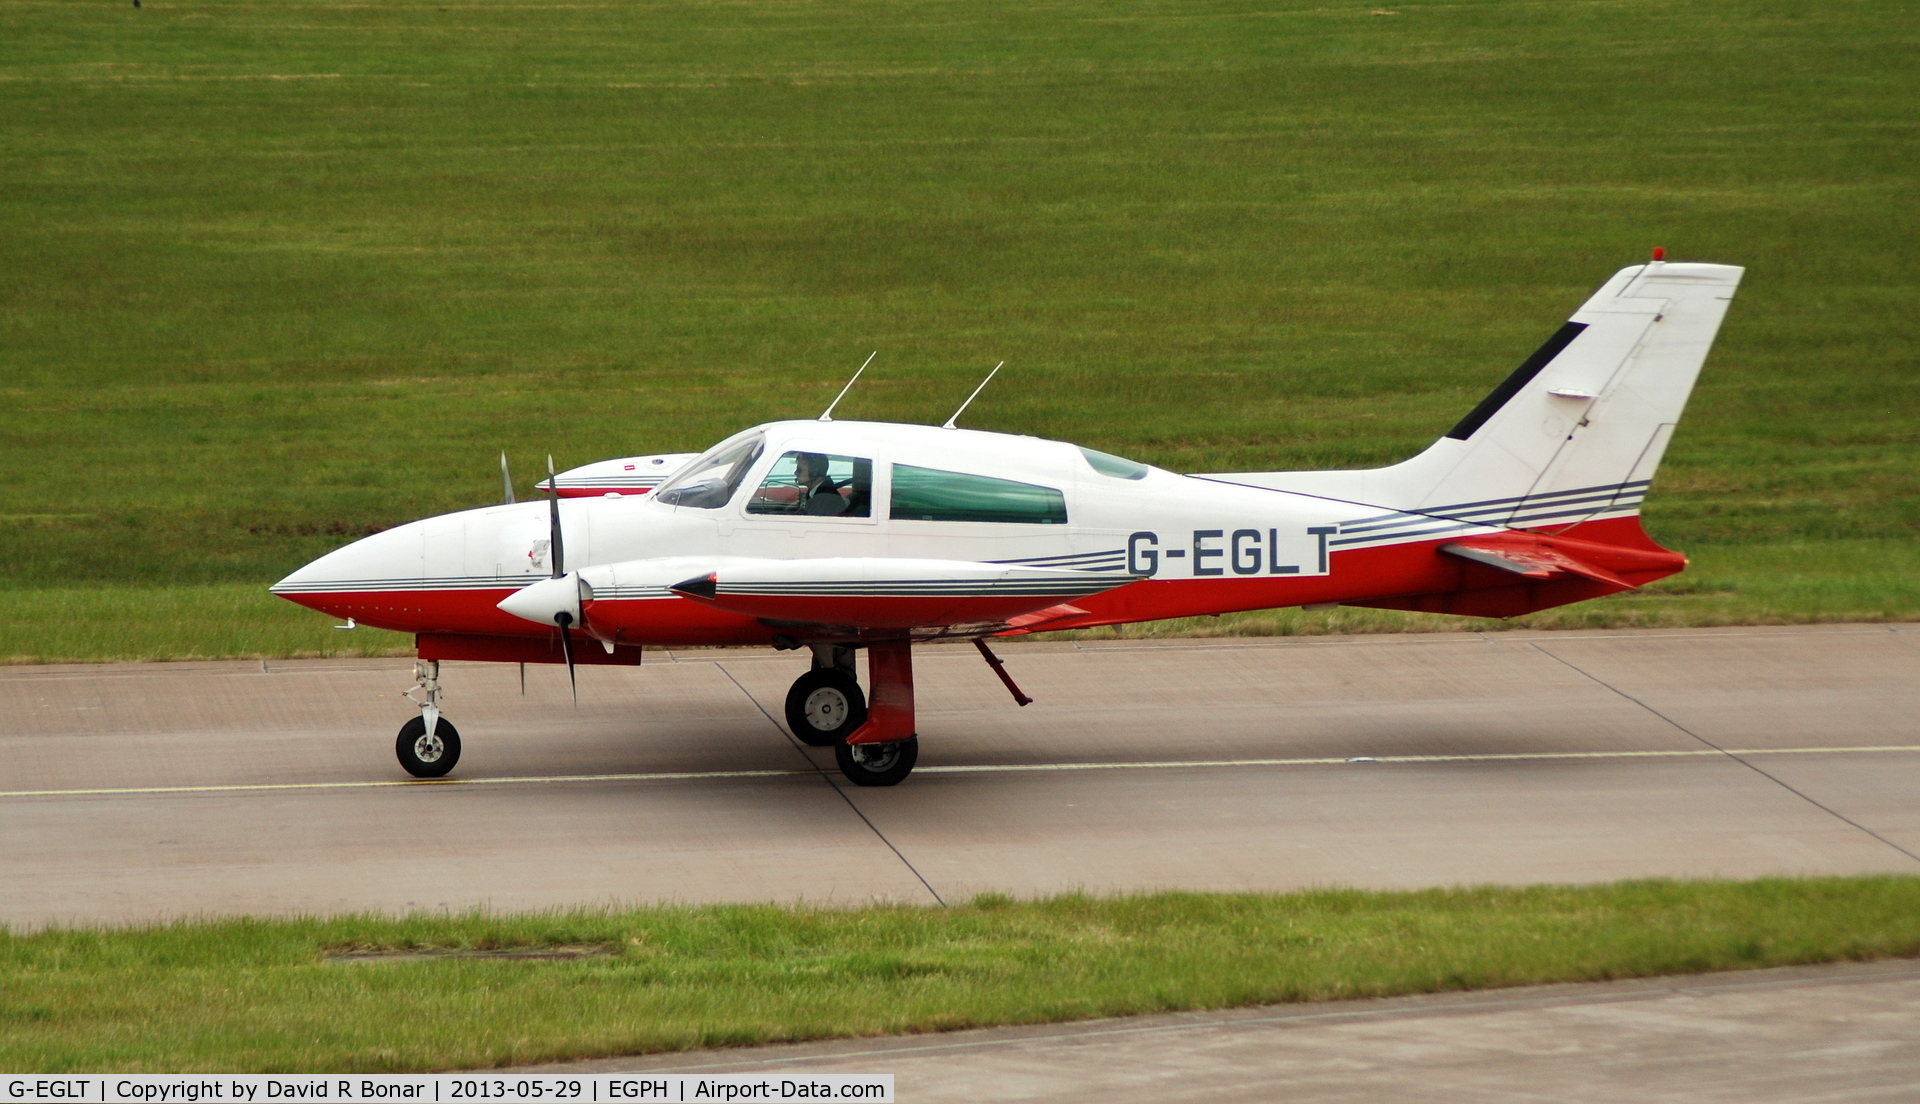 G-EGLT, 1980 Cessna 310R C/N 310R-1874, A welcome visitor to Edinburgh